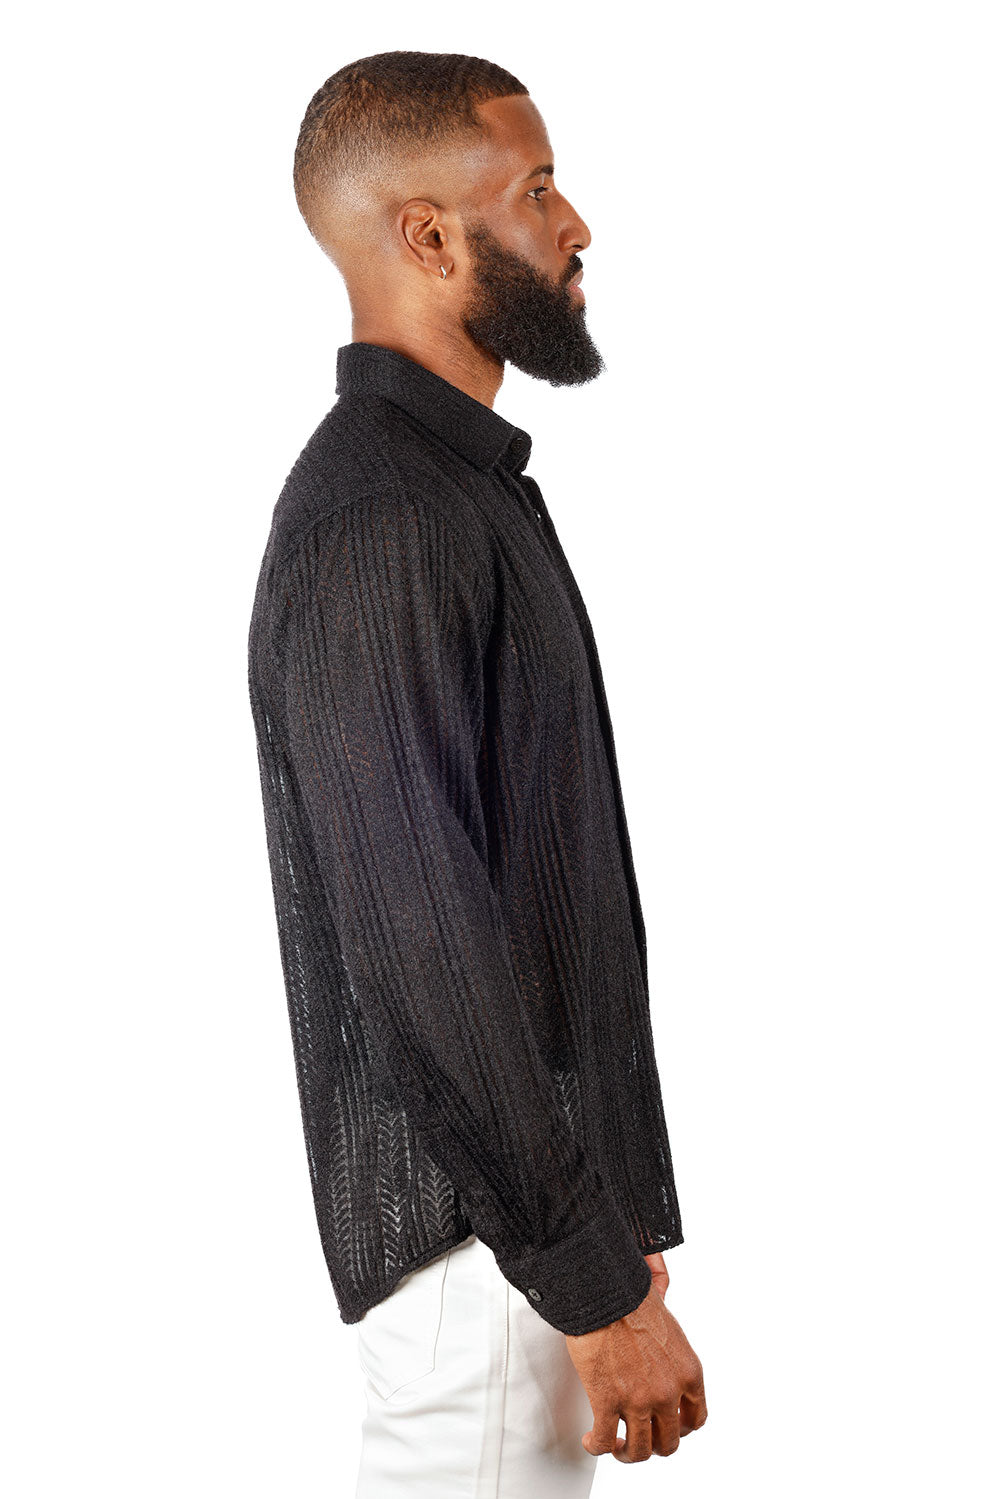 BARABAS Men's Cable Knit Wool Stretch Soft Long Sleeve Shirts 3B26 Black